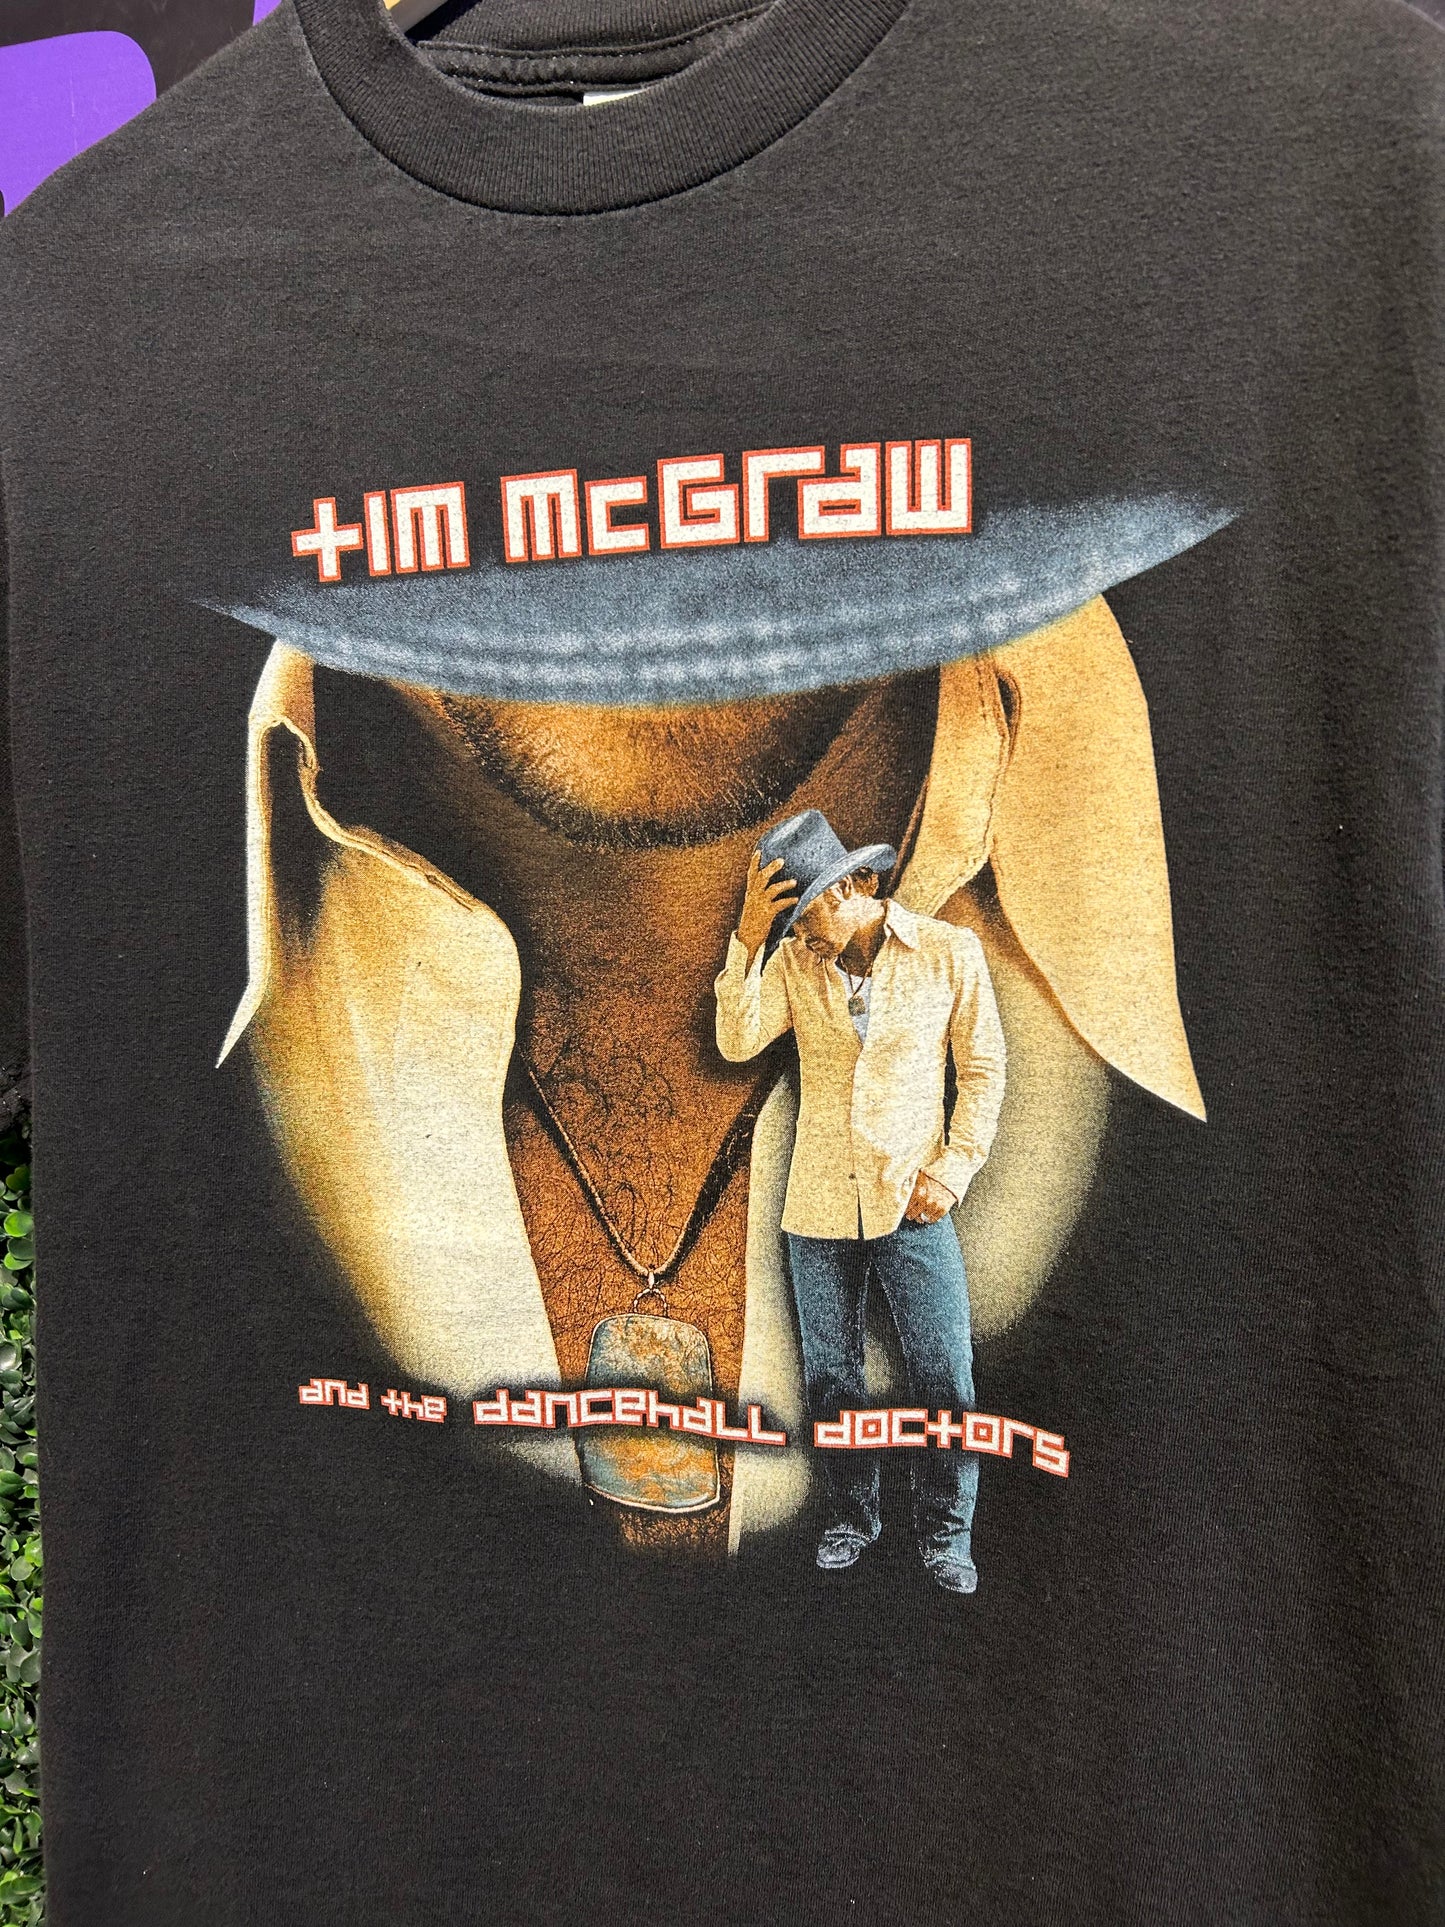 2003 Tim McGraw Tour T-Shirt. Size Medium